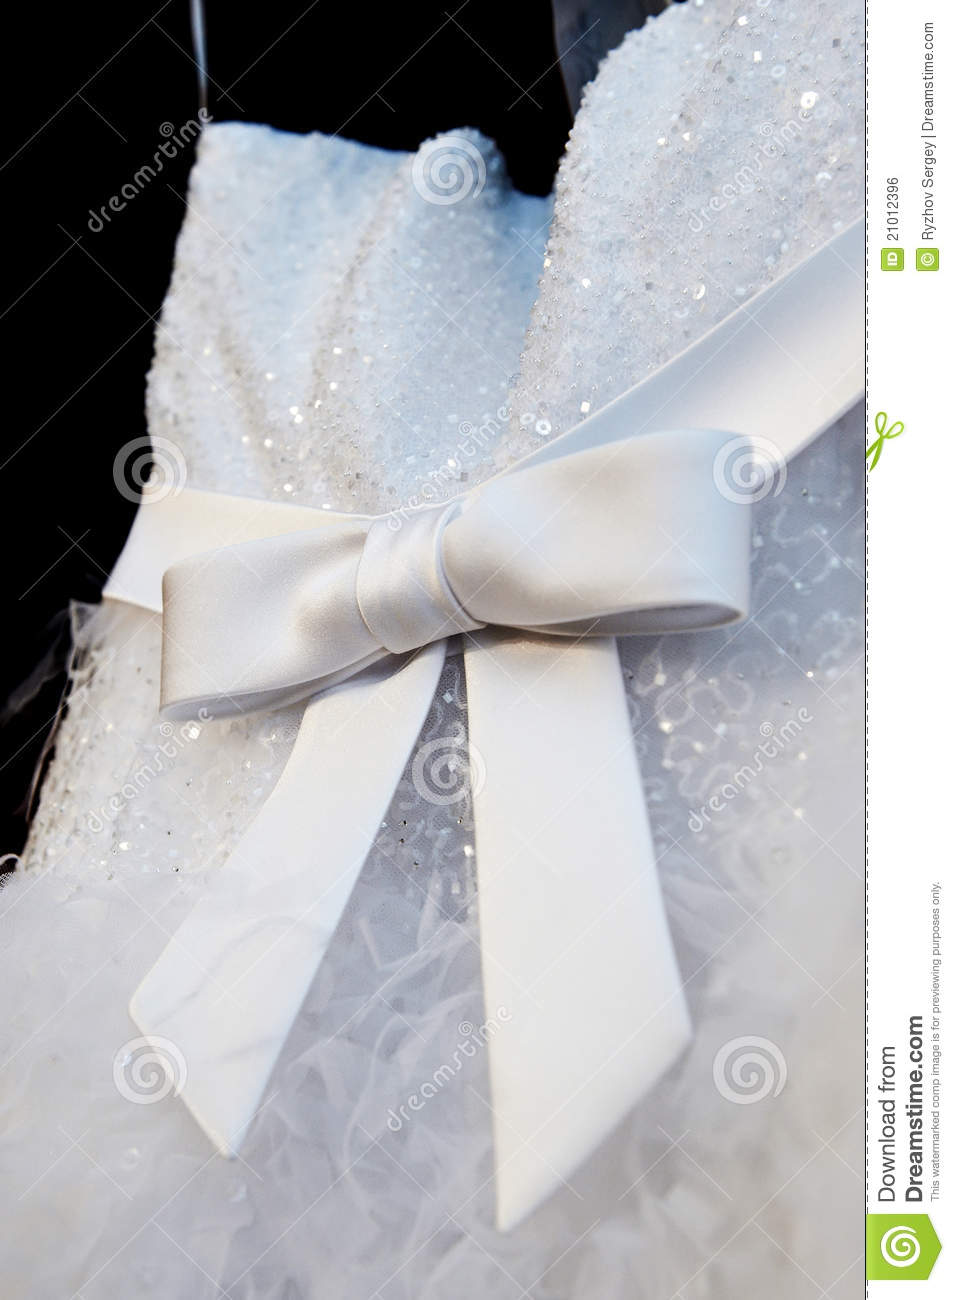 Bow On A Wedding Dress Royalty Free Stock Image   Image  21012396